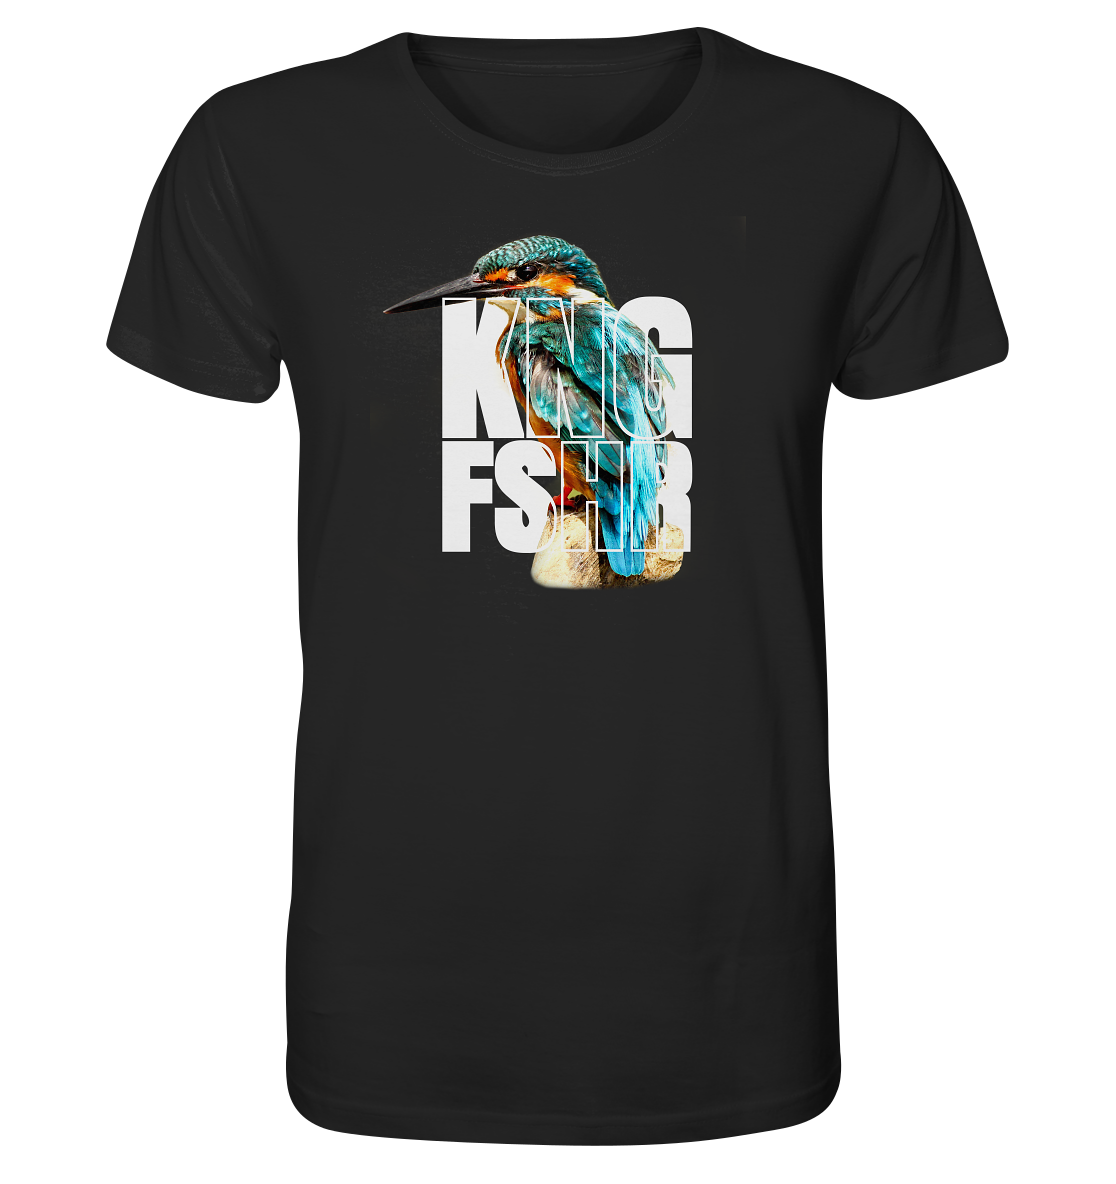 KING FISHER - Männer Bio T-Shirt